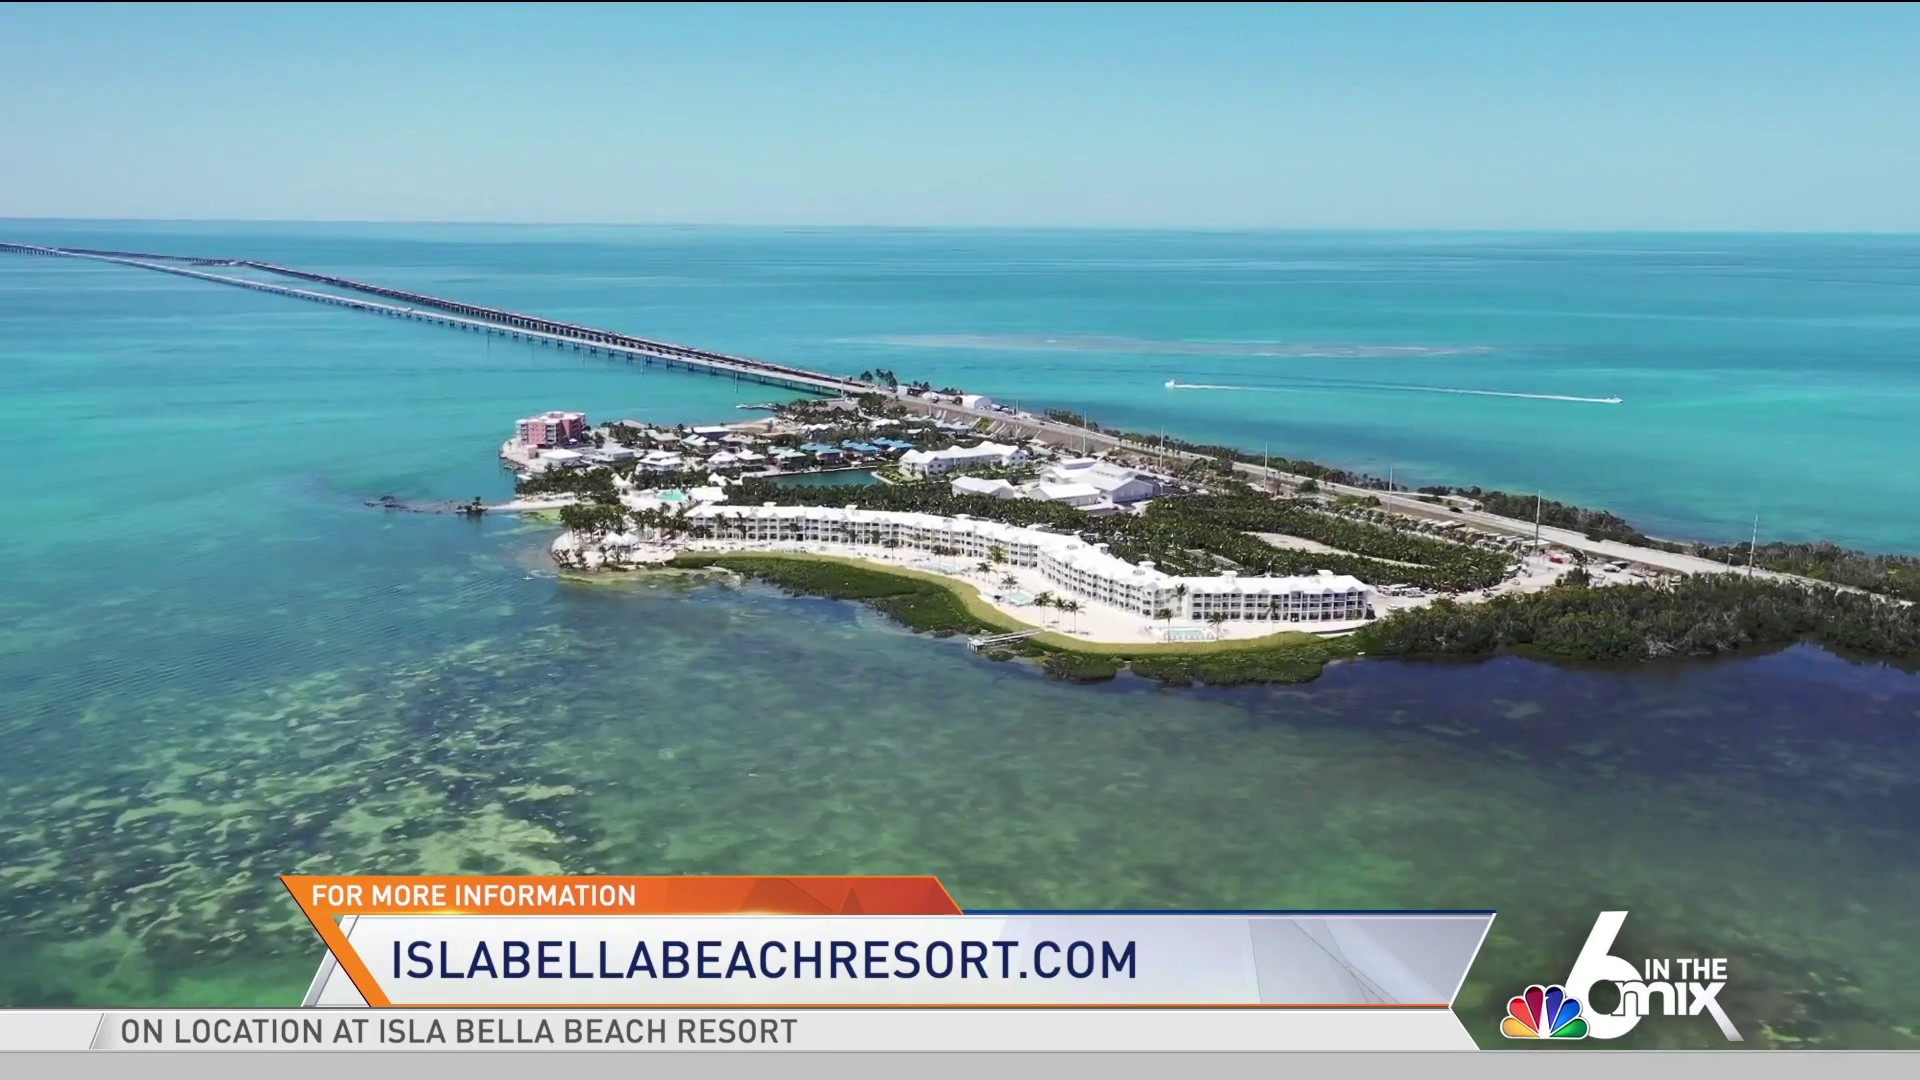 Activities Galore at Isla Bella Beach Resort – NBC 6 South Florida